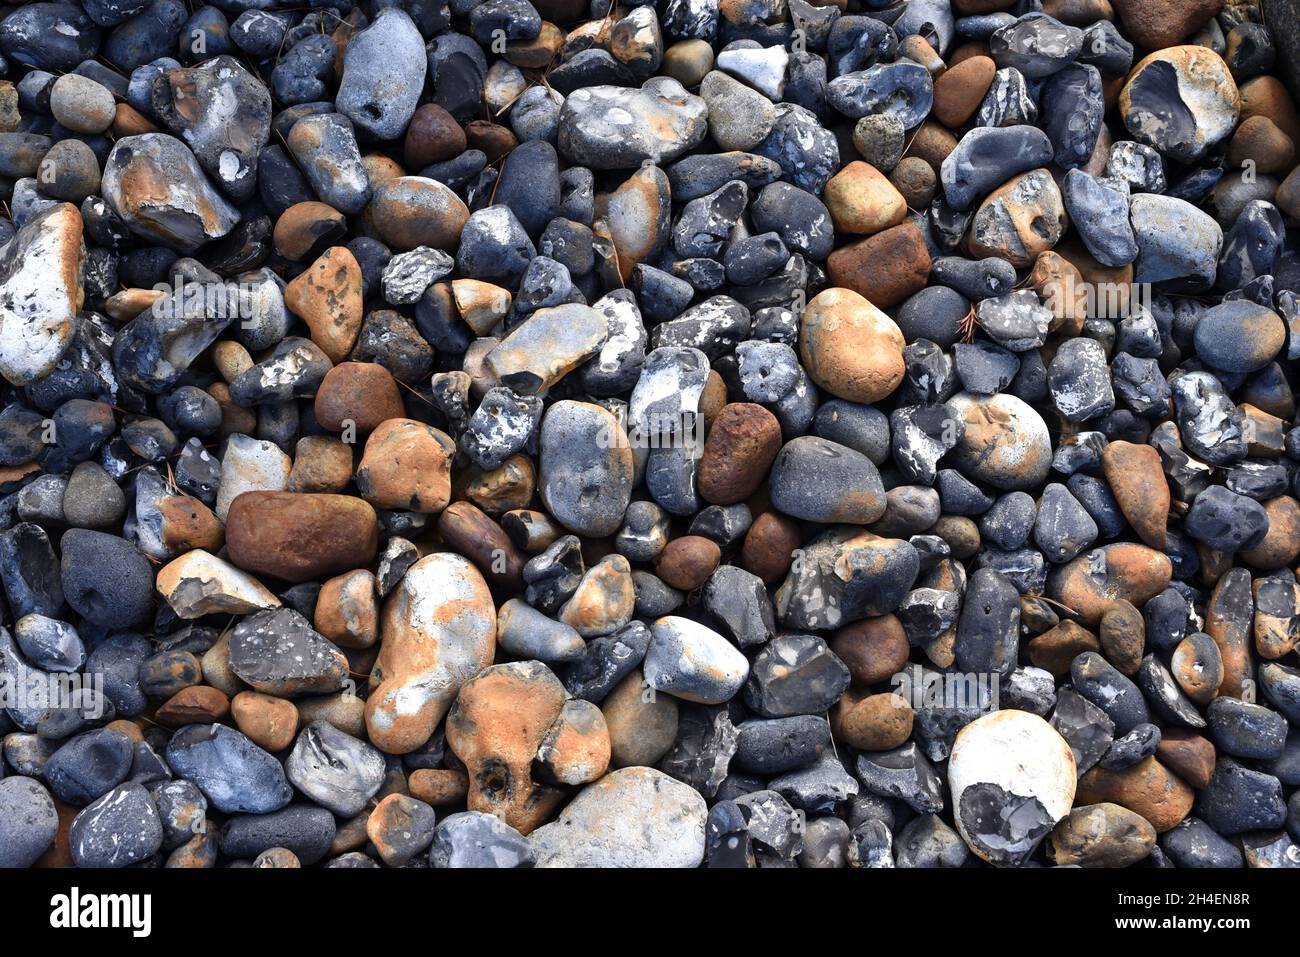 Kieselsteine an der Ostseekueste sind wunderschoen anzusehen. Pebbles on the Baltic coast are beautiful to look at. Stock Photo